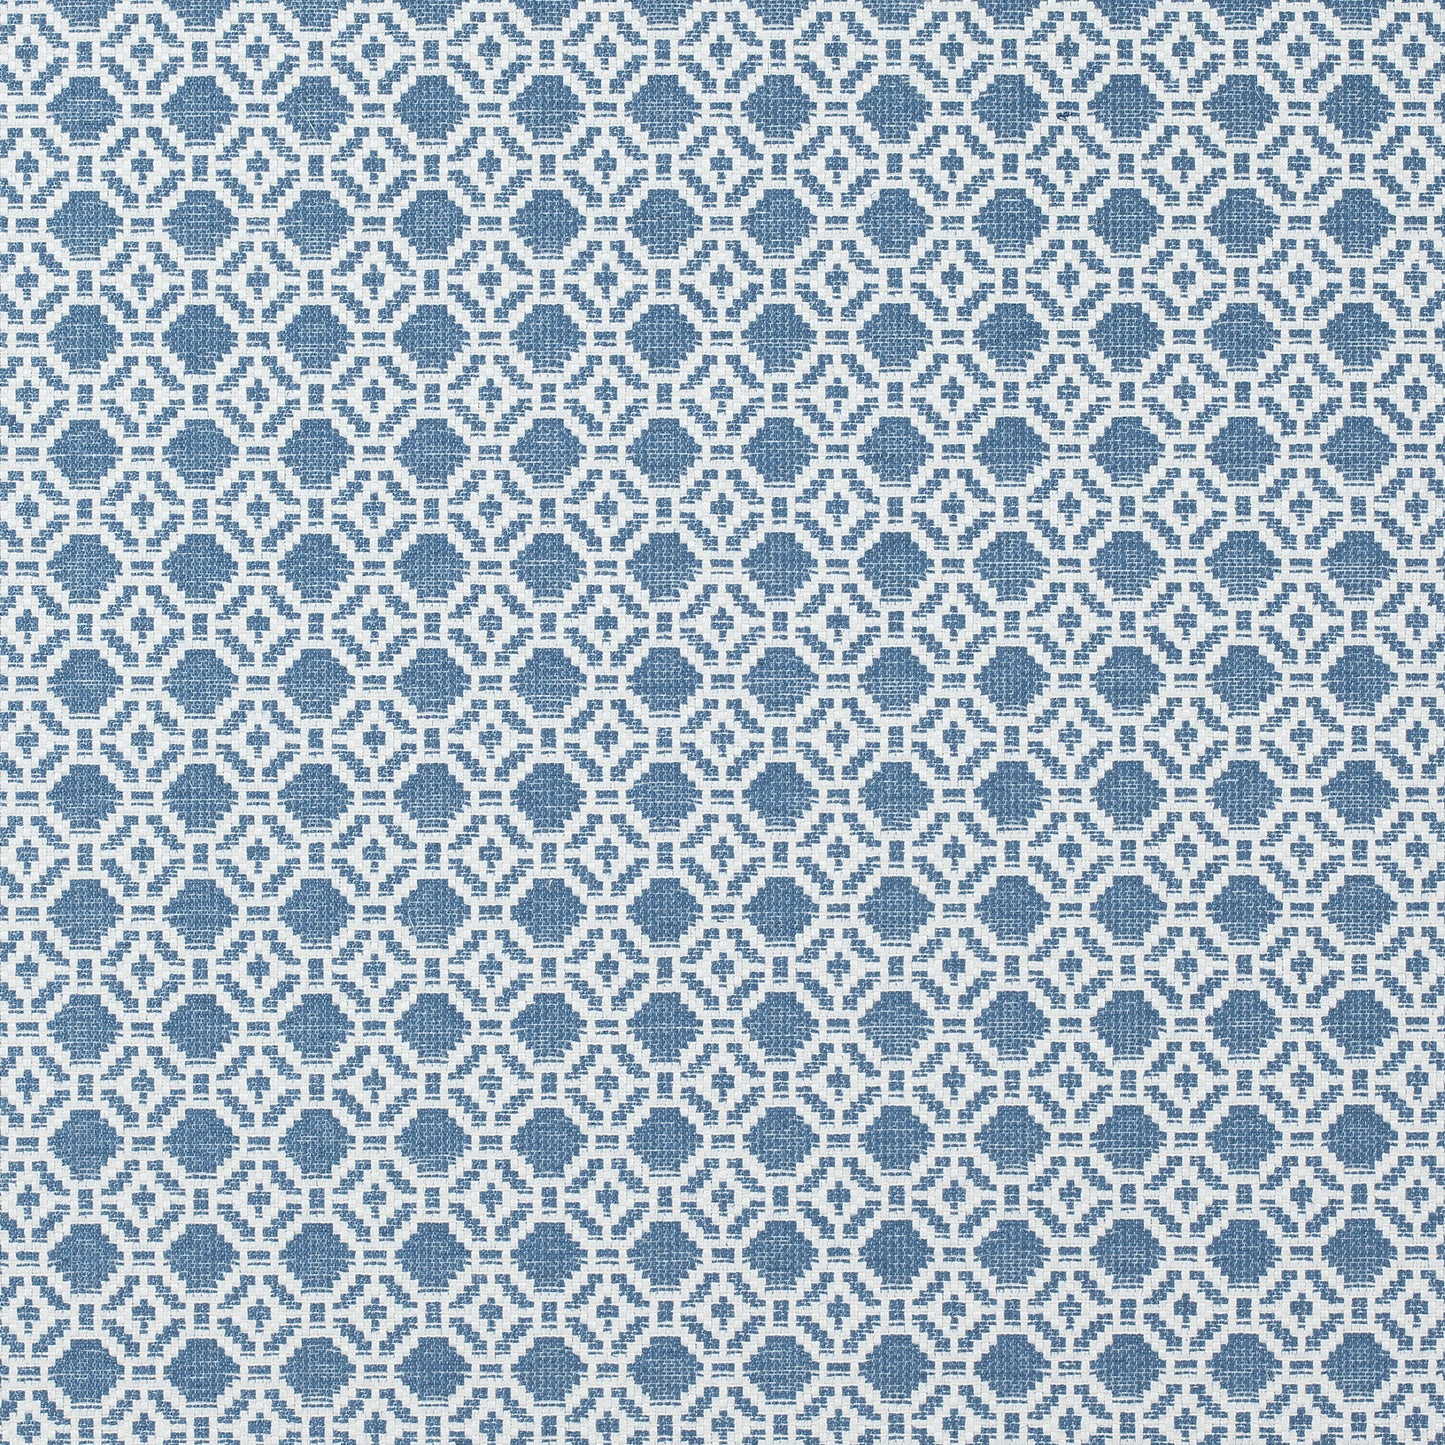 Purchase  Ann French Fabric Item# AW73039  pattern name  Amalfi